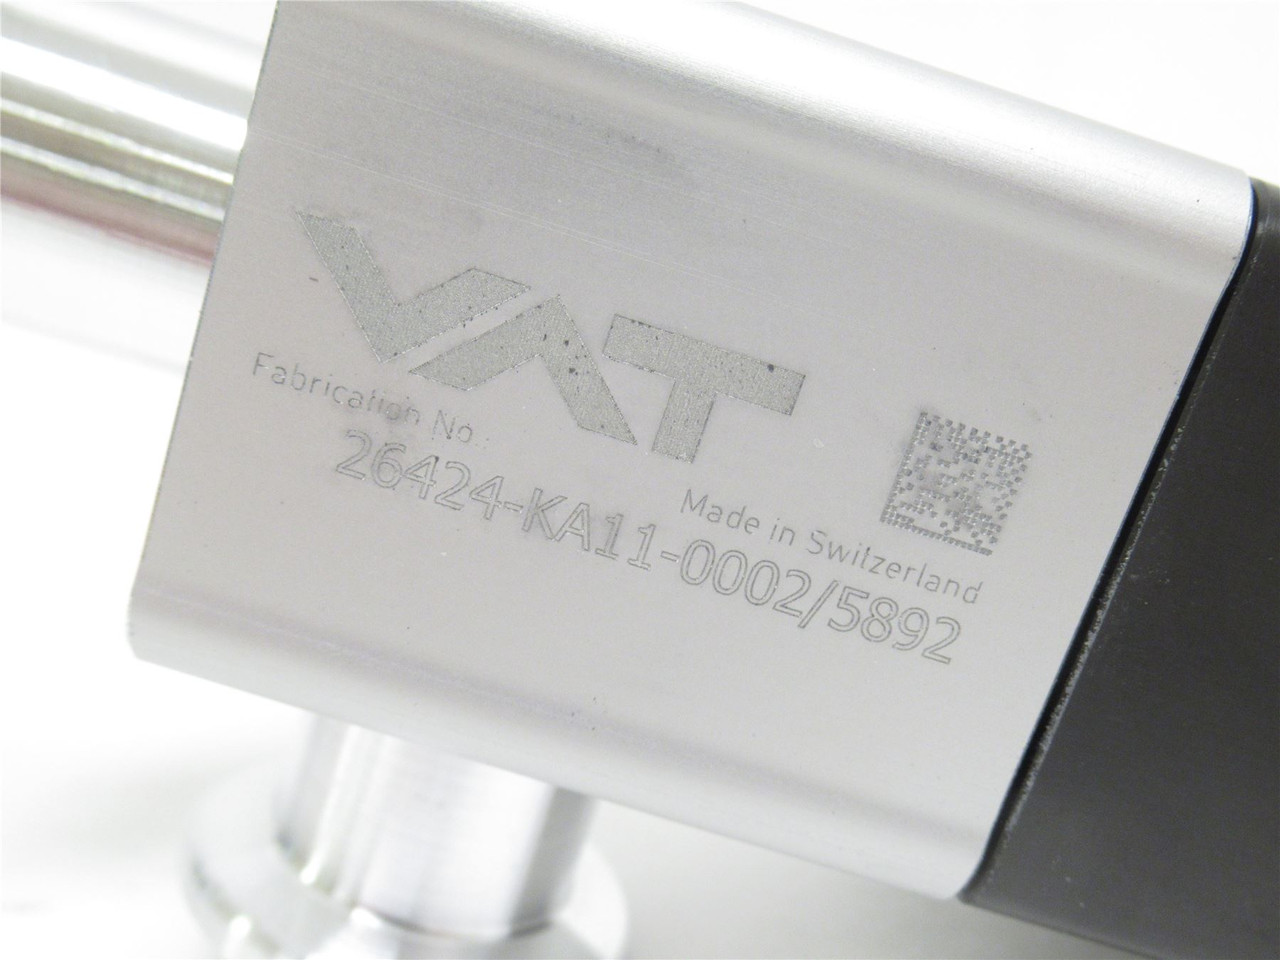 VAT 26424-KA11-0002/5892; High Vacuum Valve; RA; Peumatic